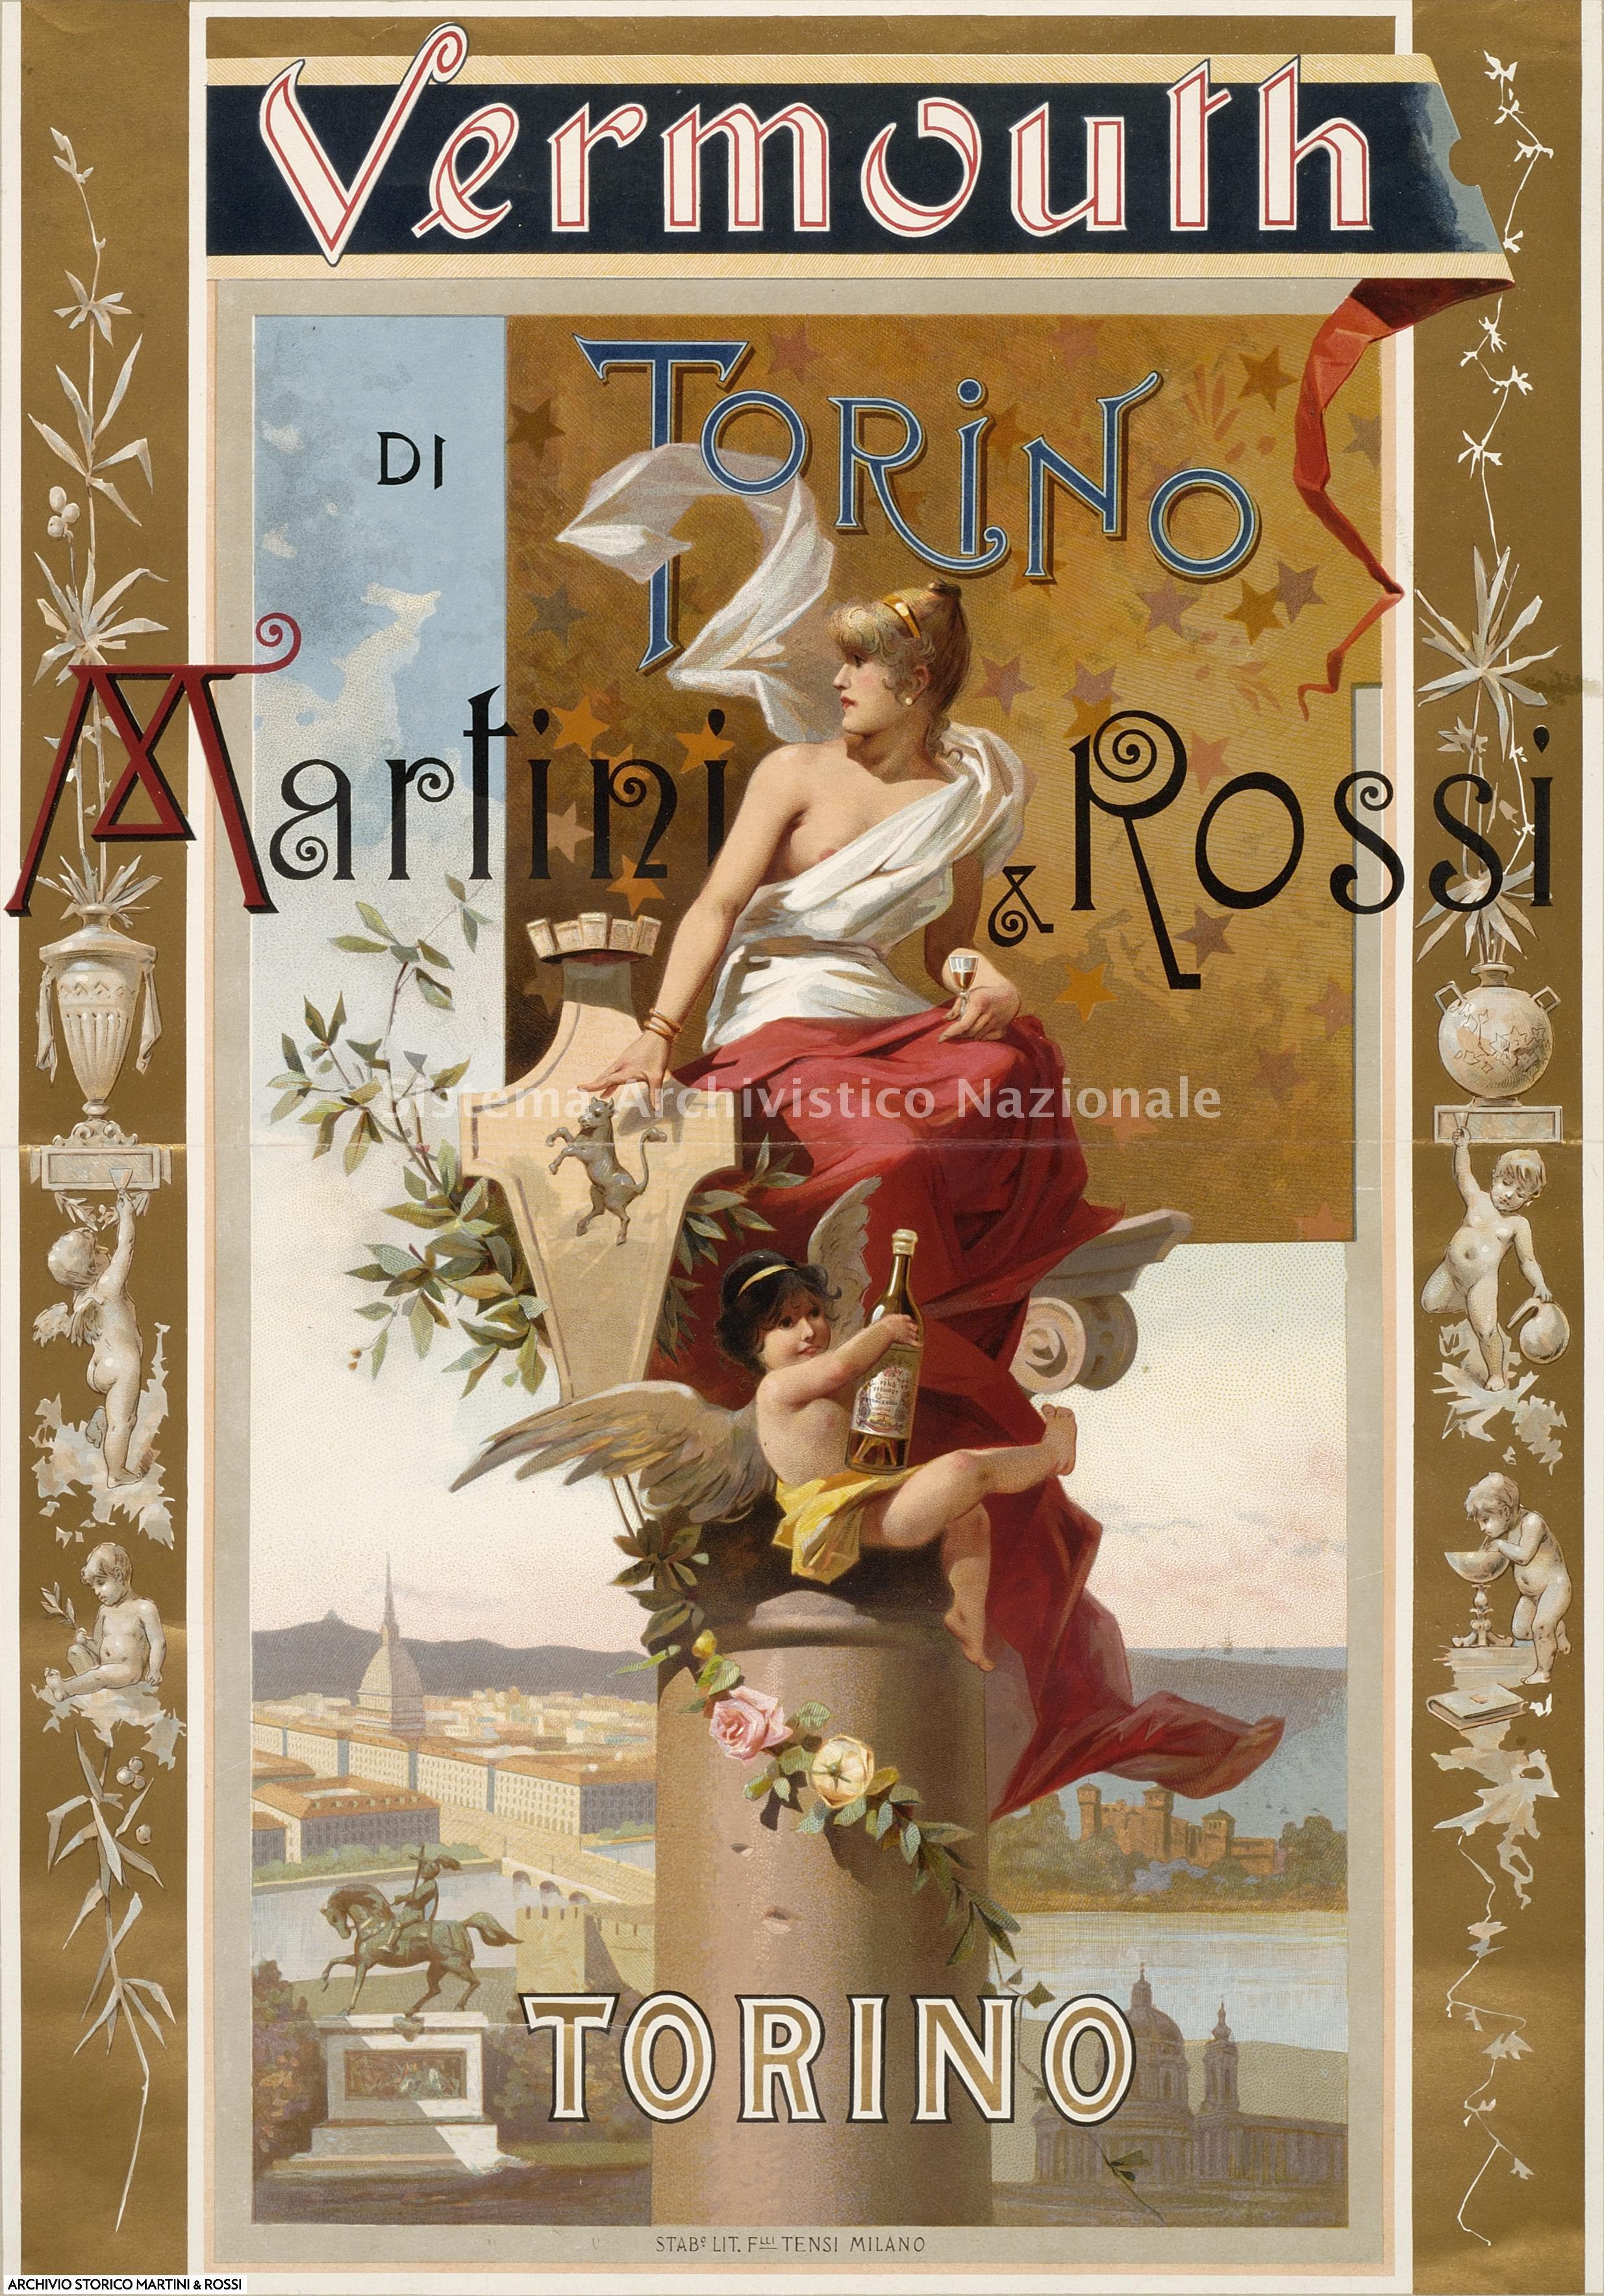   Manifesto pubbliciatario Martini & Rossi, 1895
